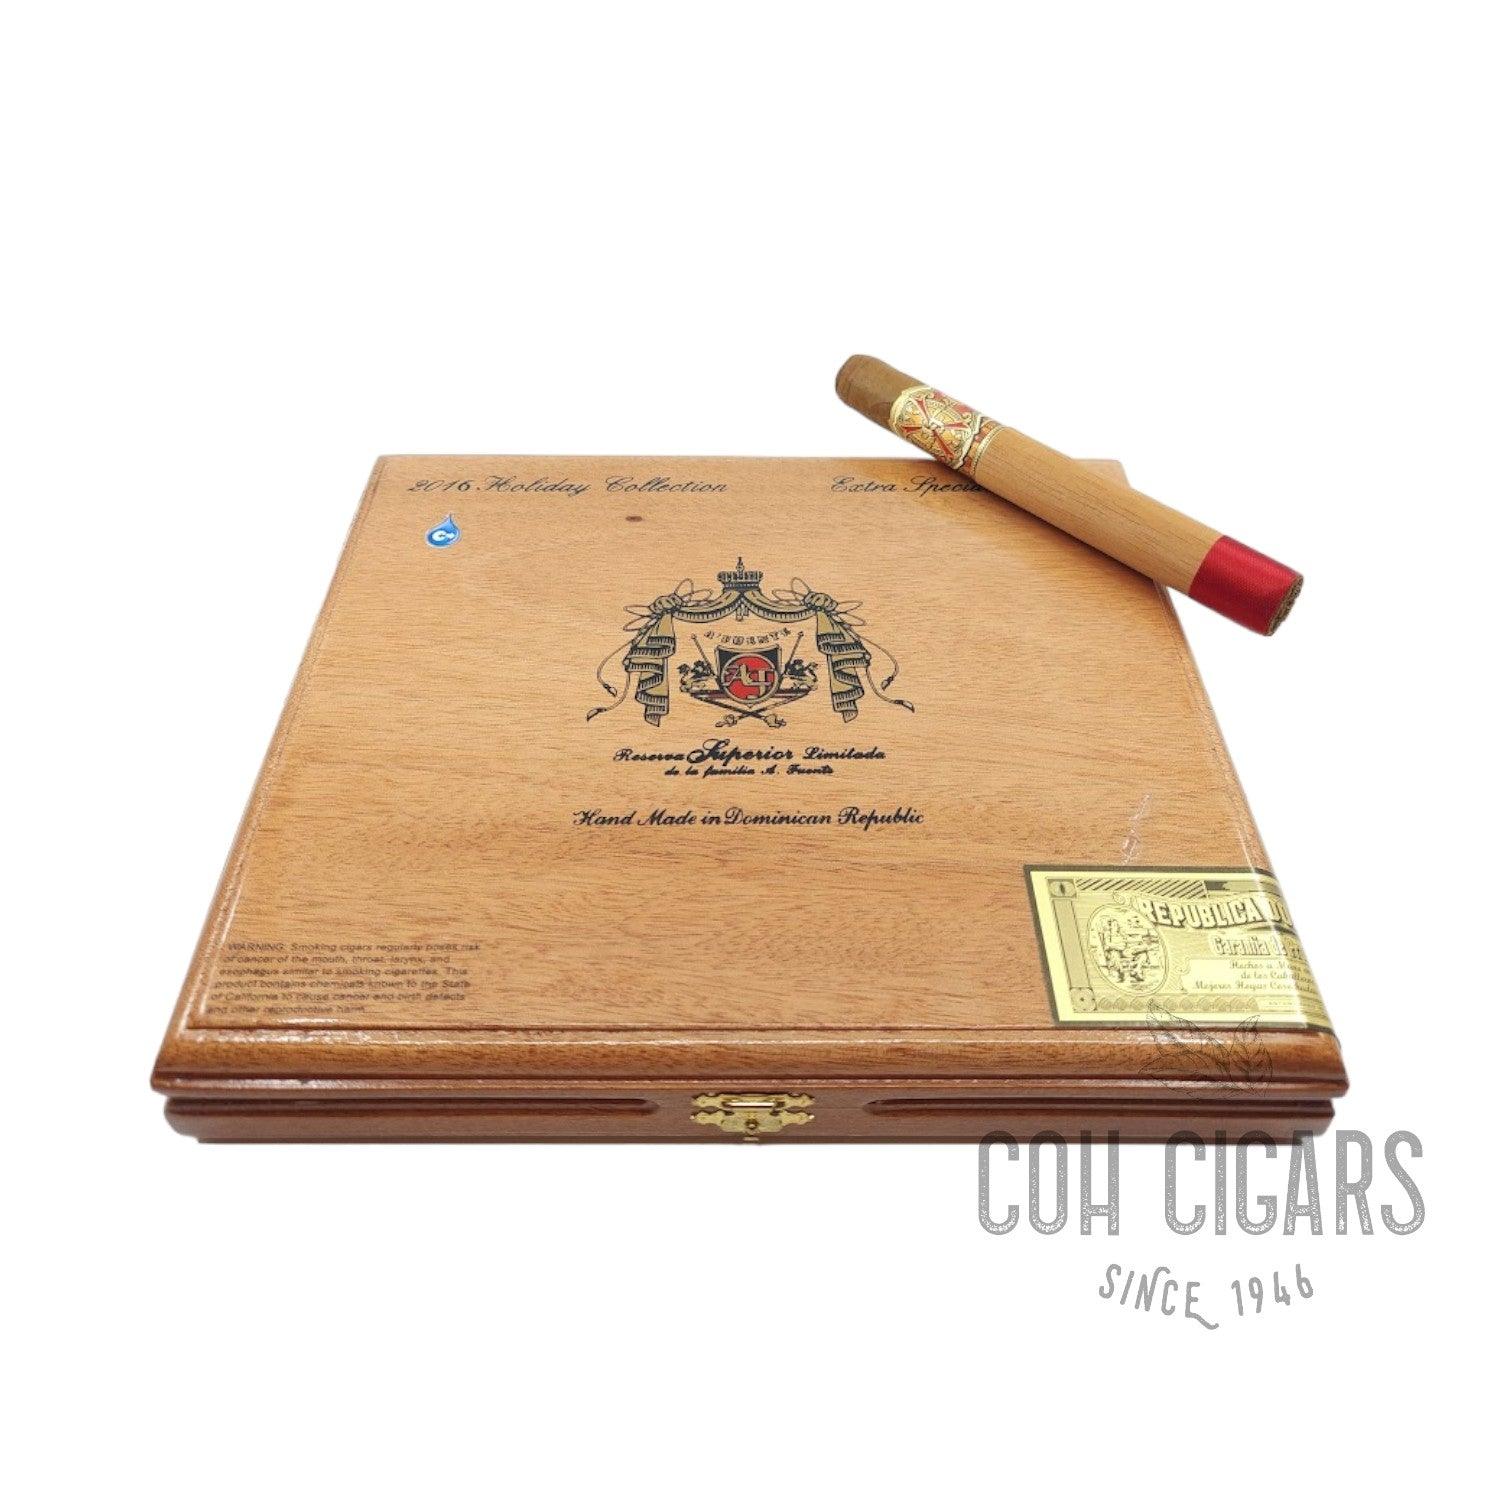 Arturo Fuente Cigar | Holiday Collection Xtra Special | Box 10 - hk.cohcigars